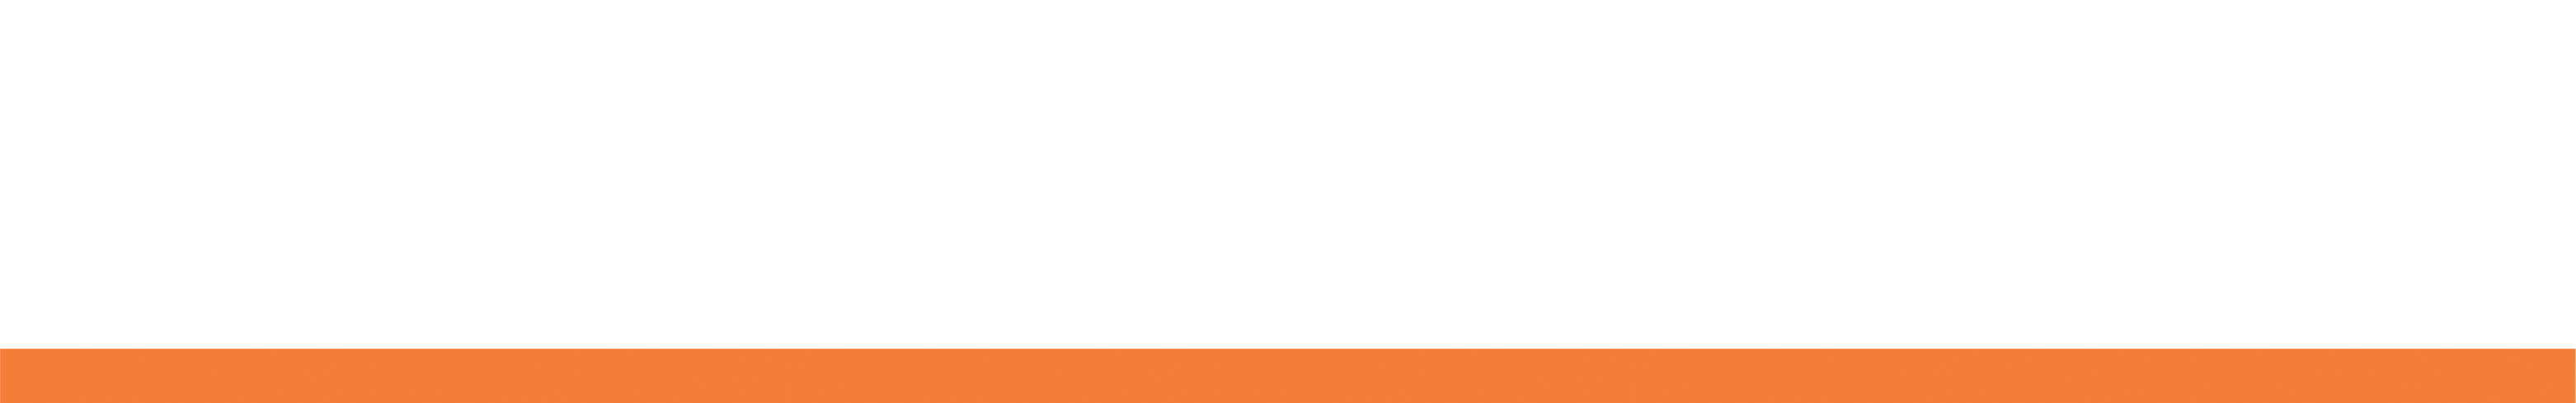 boundless-logo-no-icon